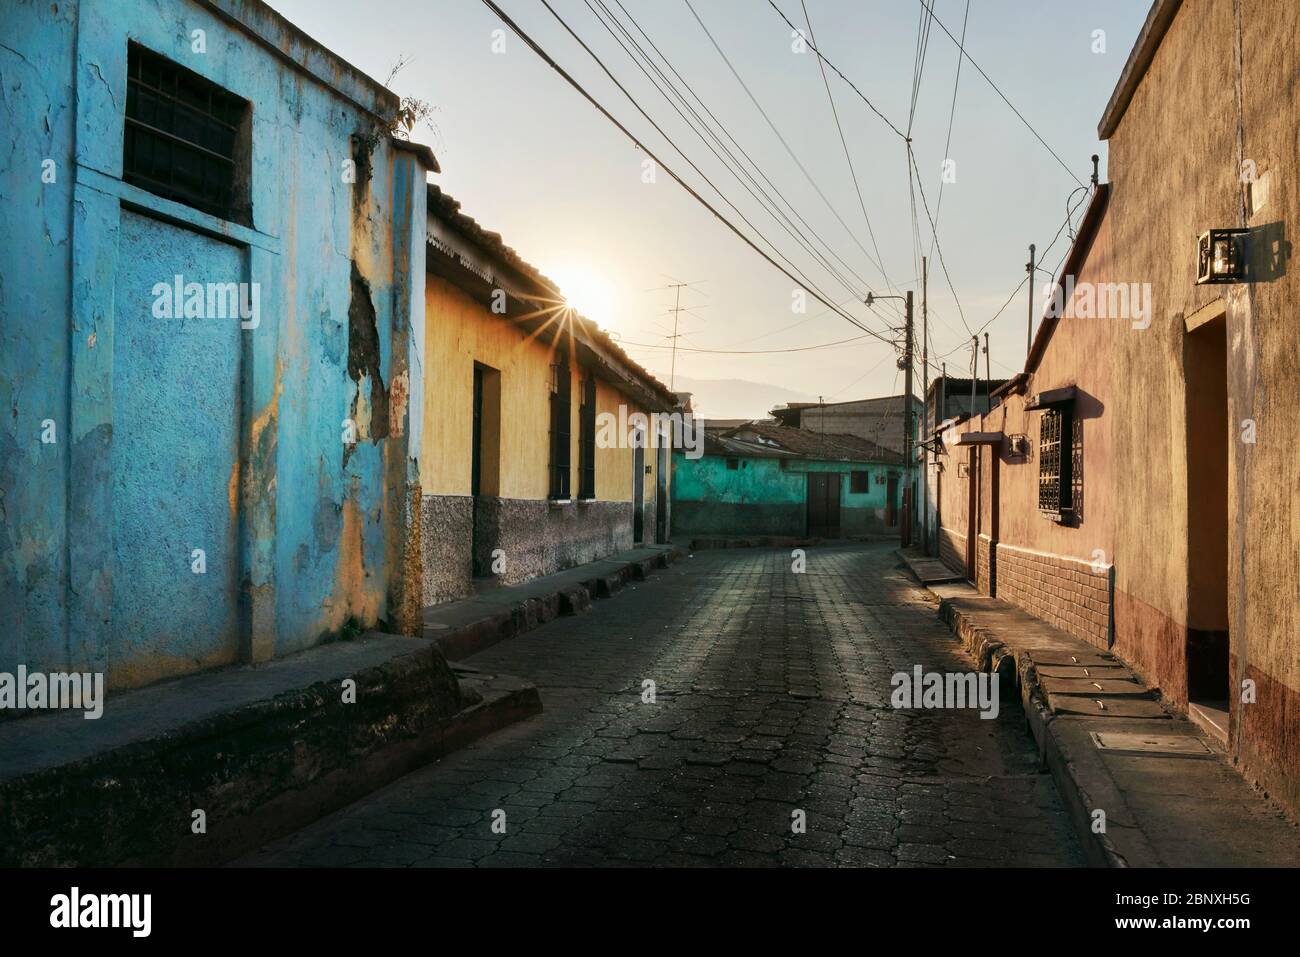 Peaceful street scene with colourful houses in central Quetzaltenango (Xela), Guatemala. Mar 2019 Stock Photo